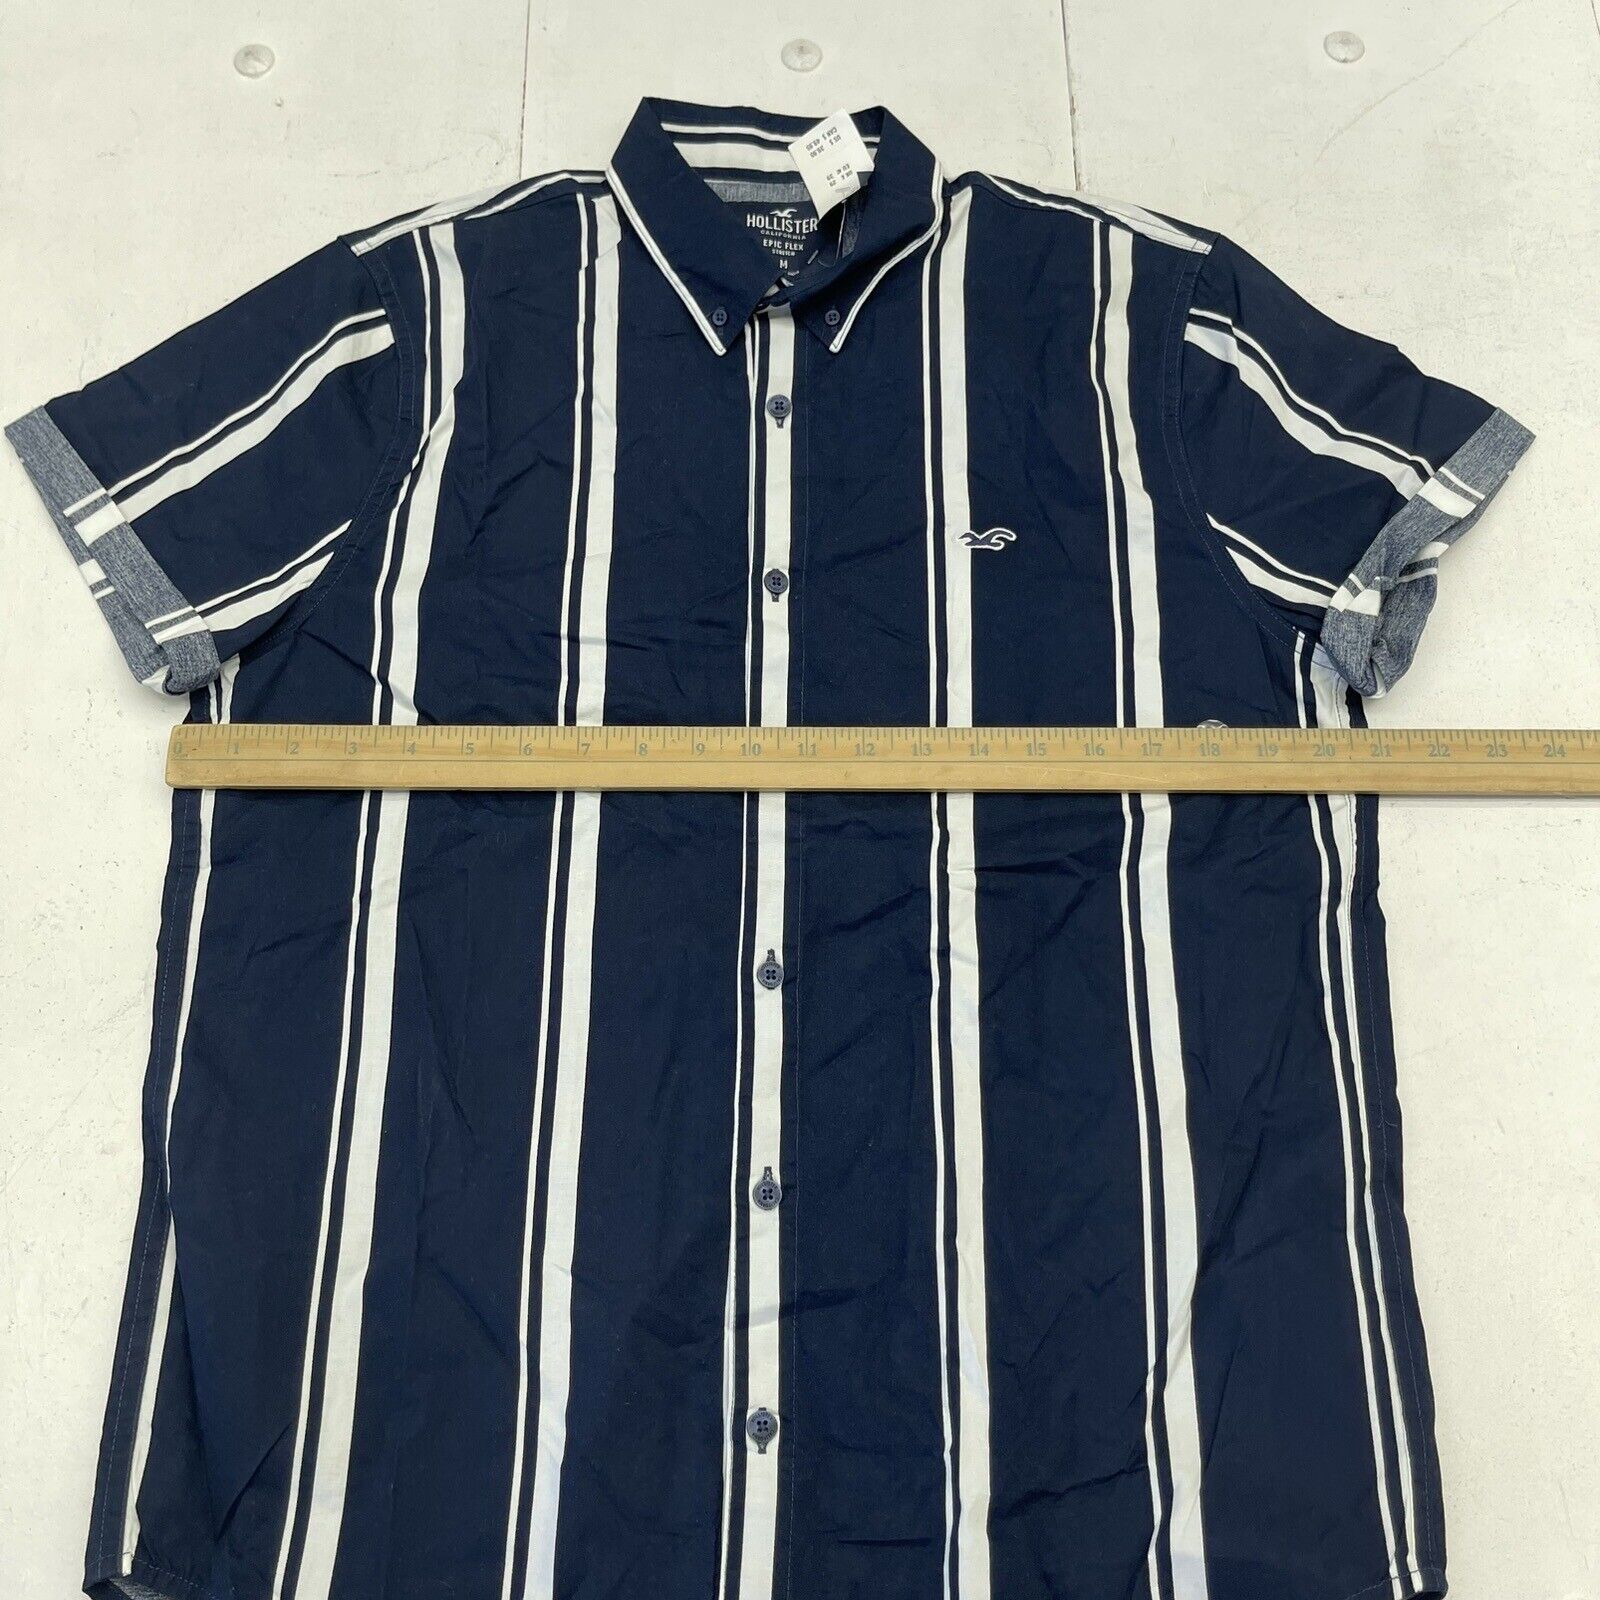 Hollister stripe shirt in navy